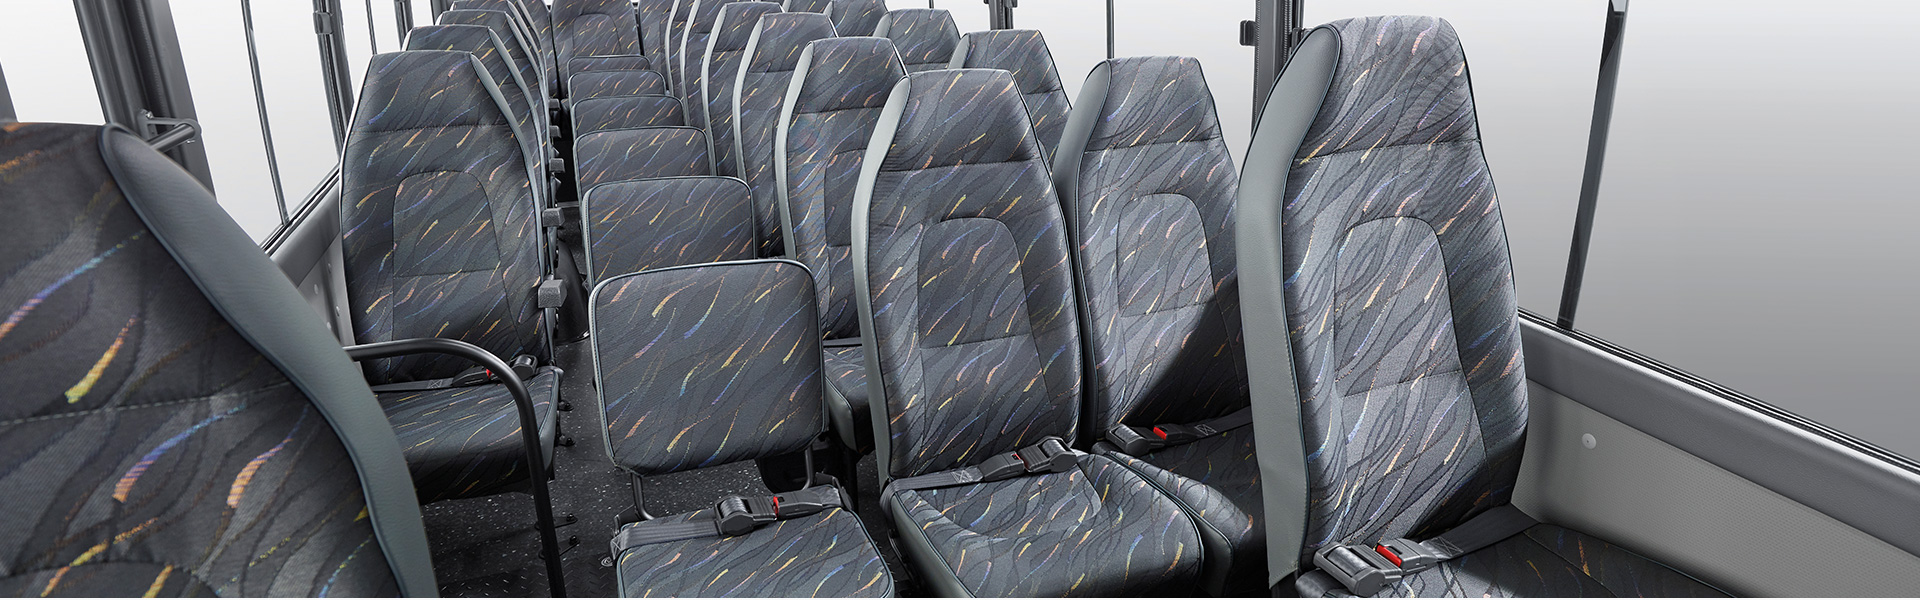 33 Passenger Seats